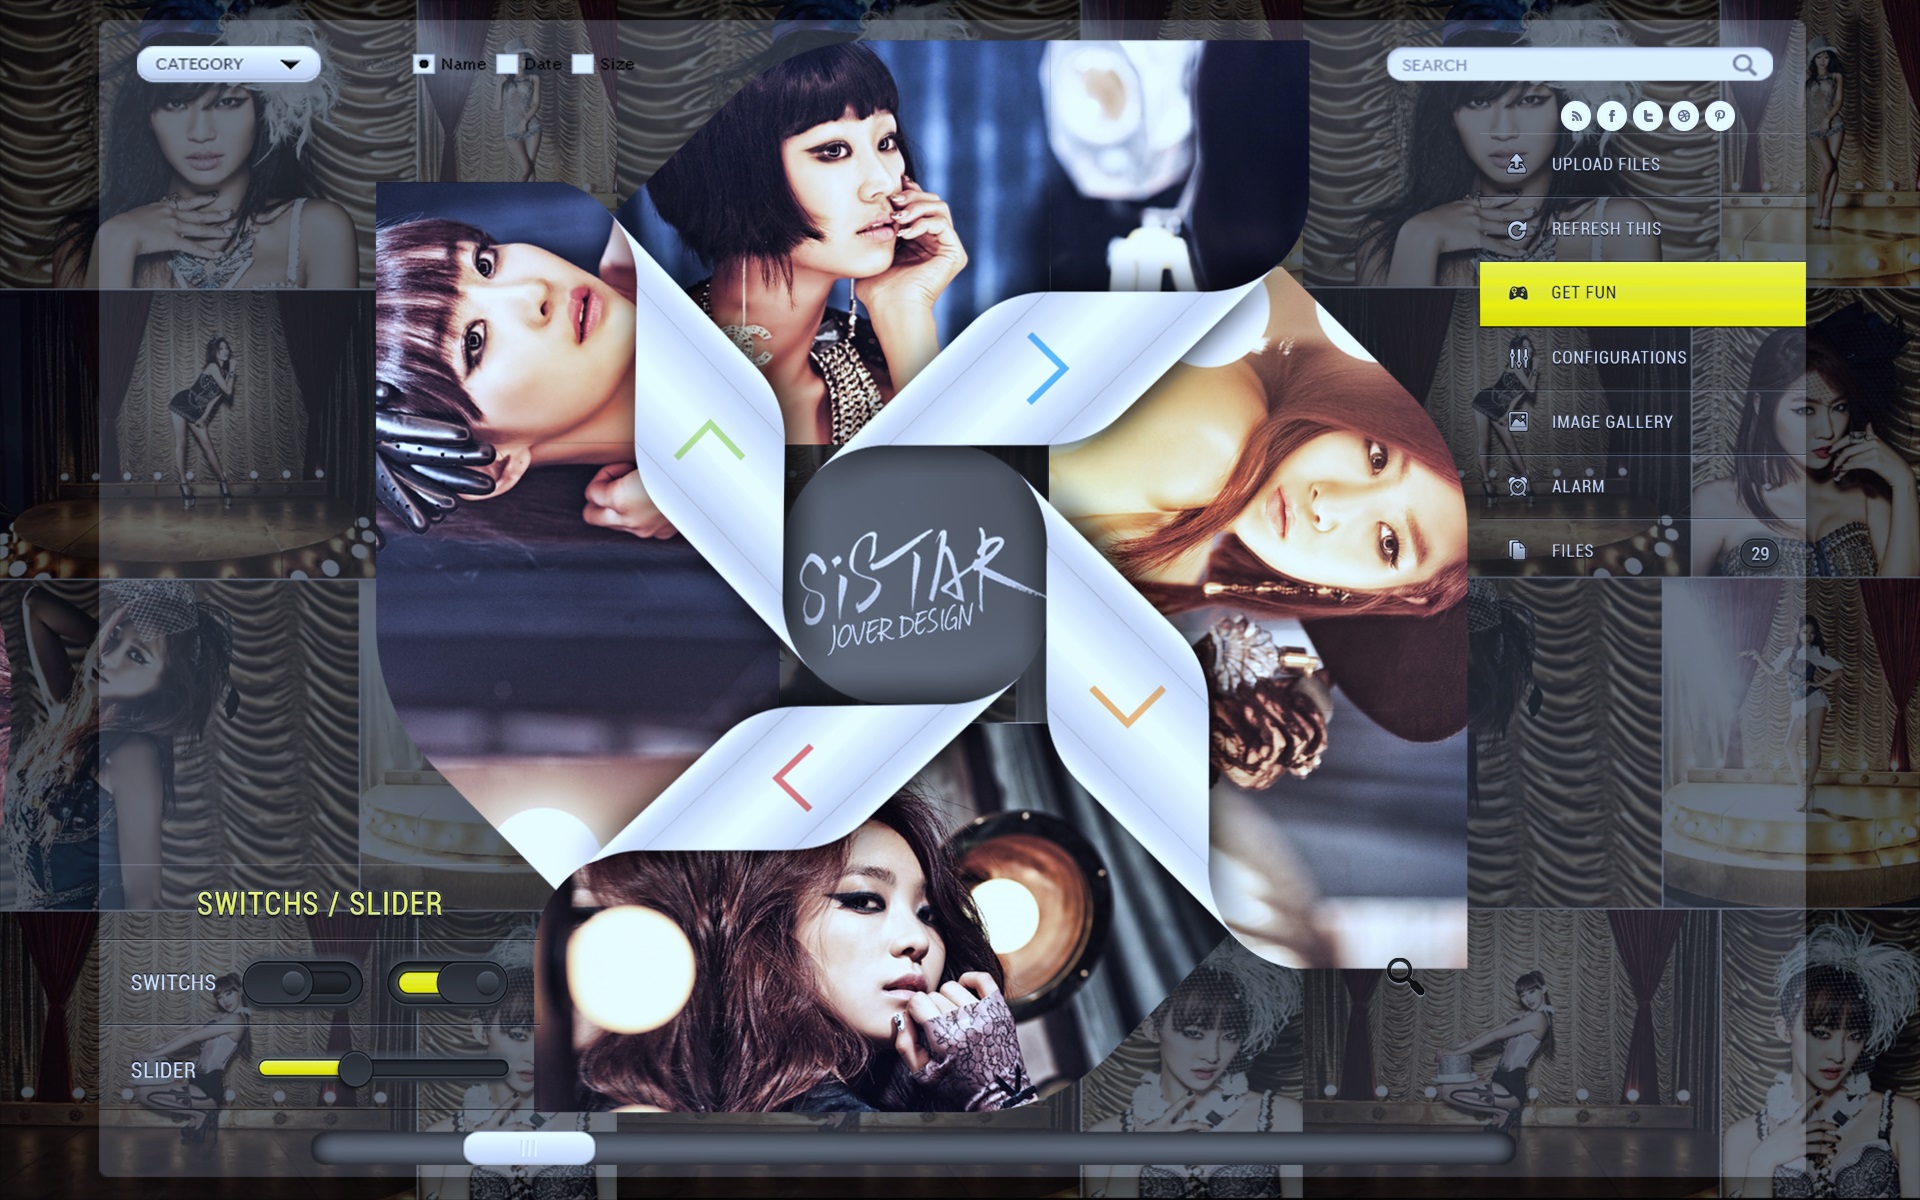 Music Sistar HD Wallpaper | Background Image